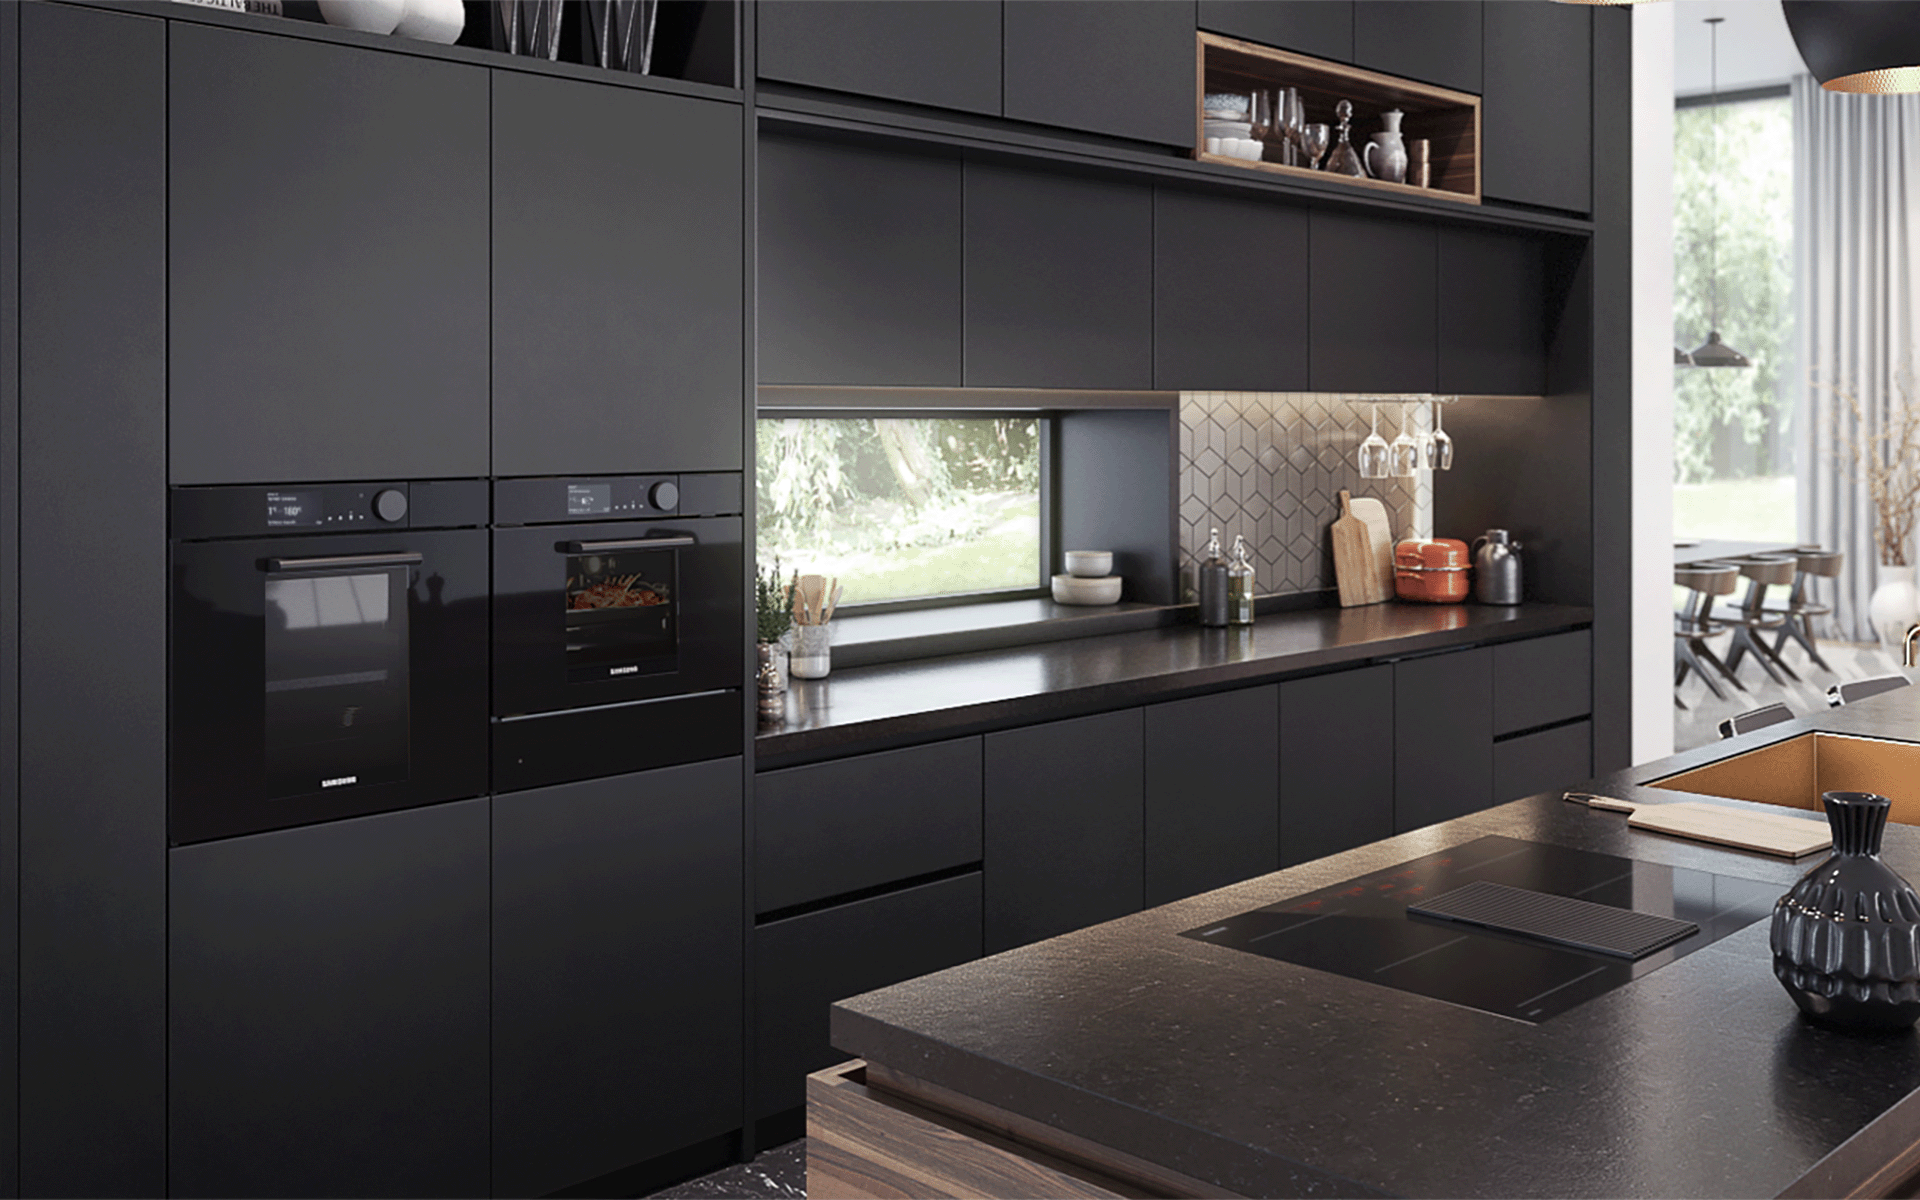 2 built in ovens in a black modern kitchen